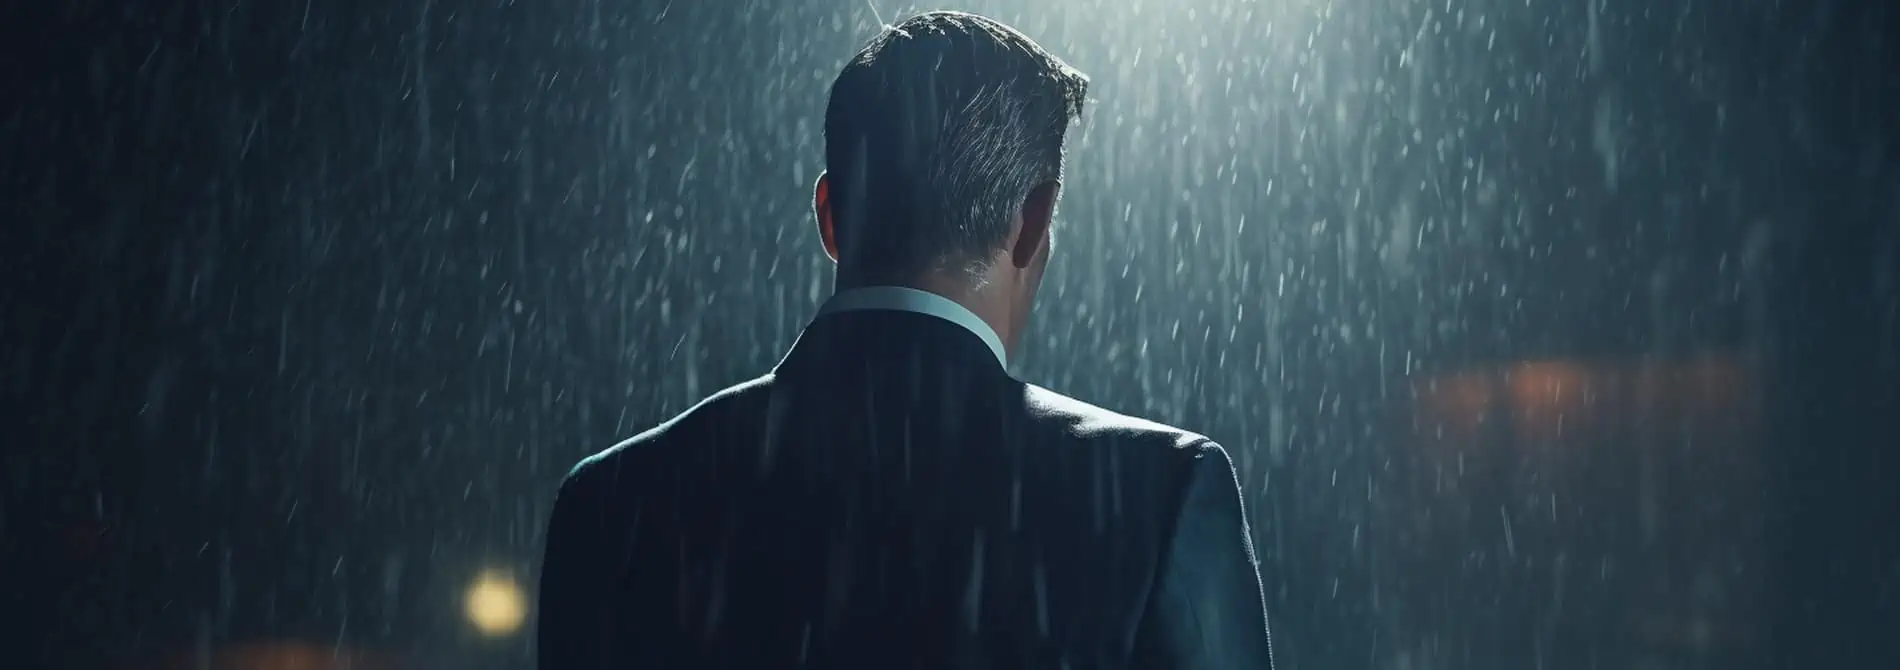 Wealthy man standing in rain depicting depression.